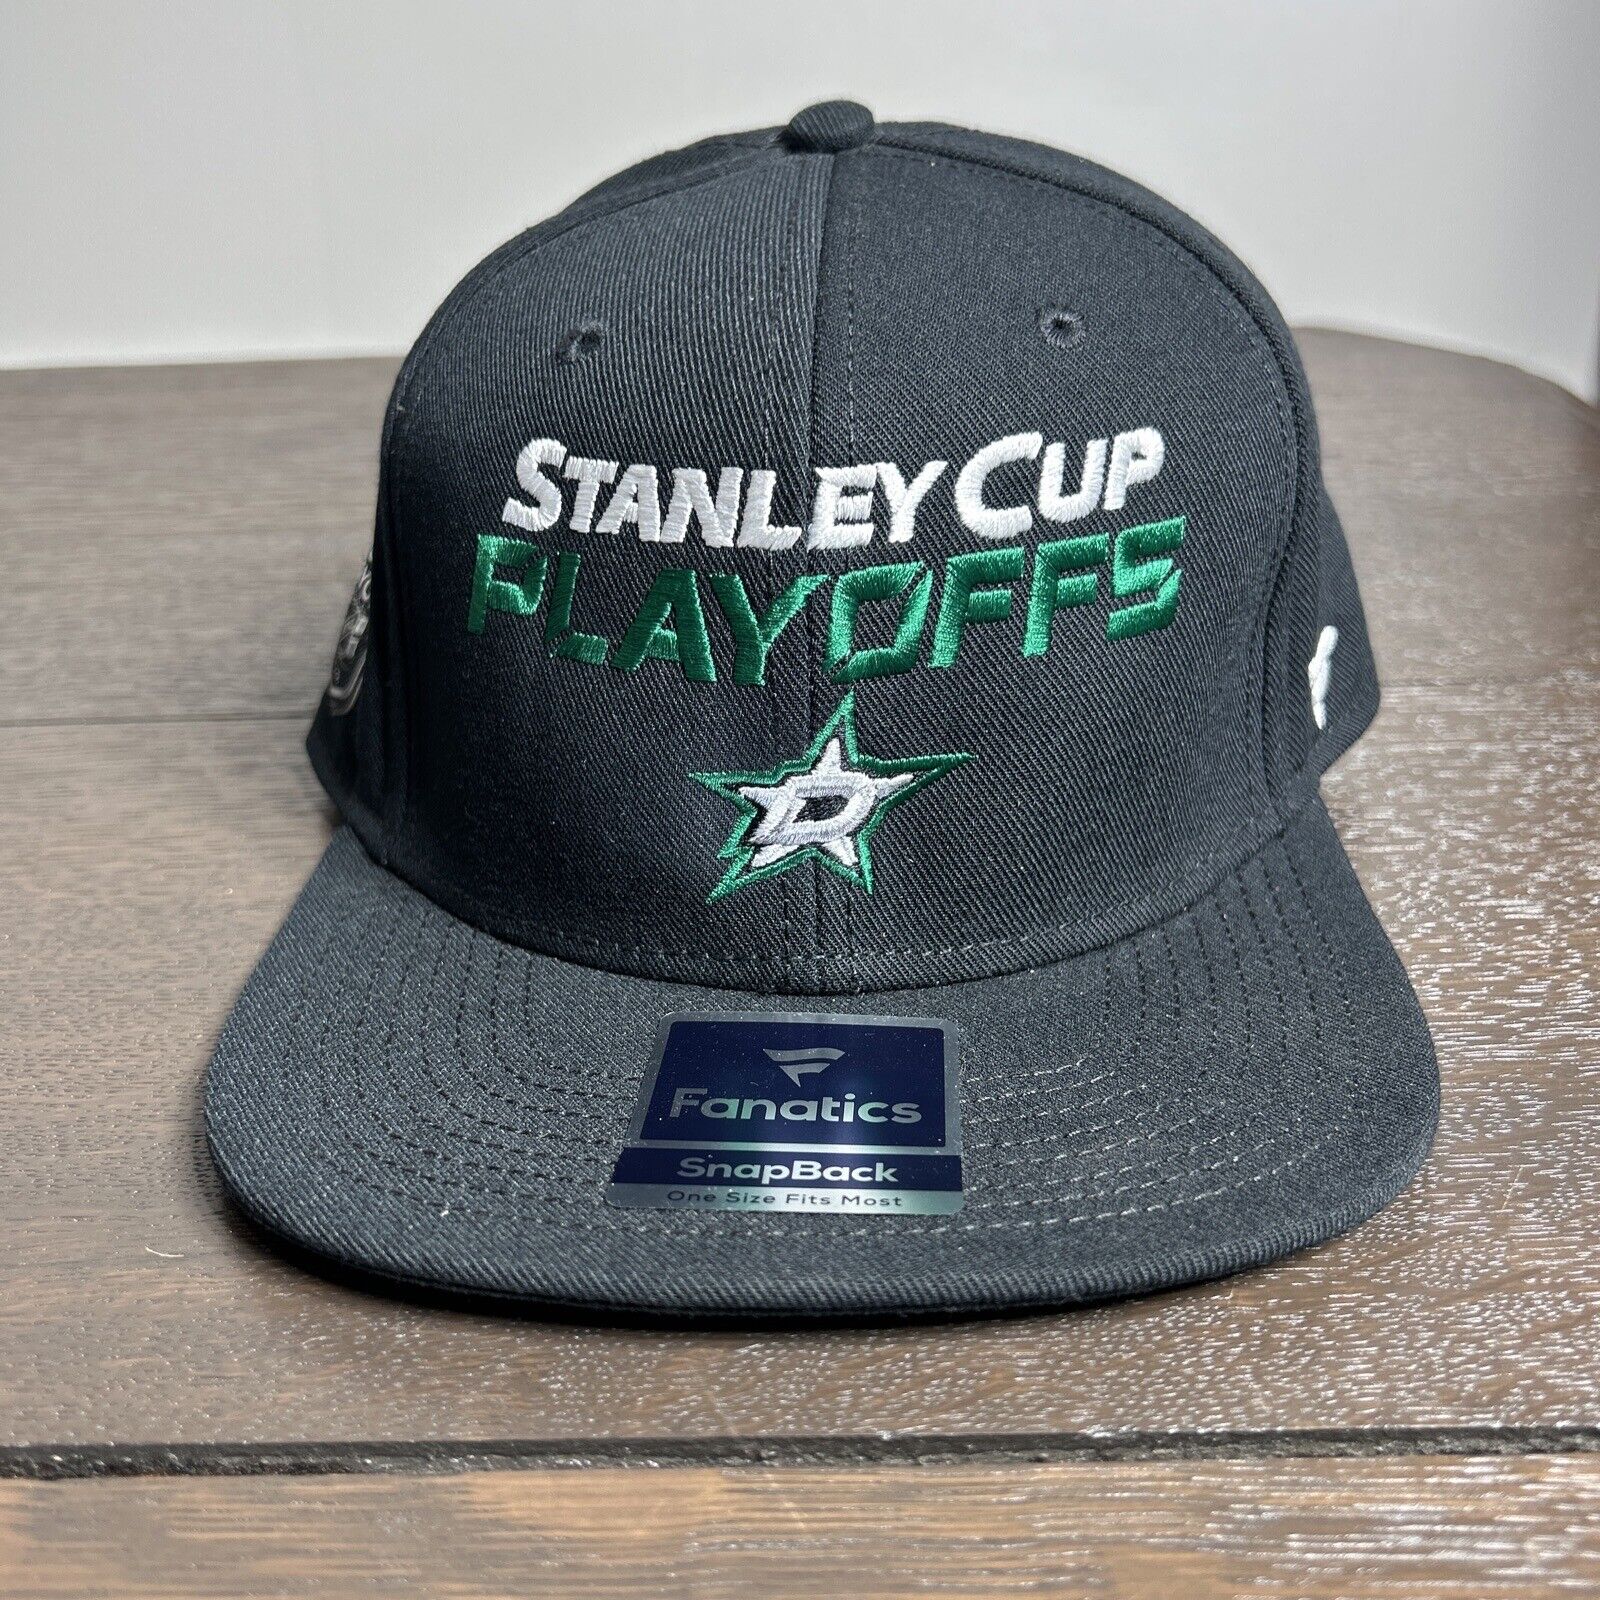 DALLAS STARS 2019 STANLEY CUP PLAYOFFS FANATICS ADJUSTABLE SnapBack HAT CAP